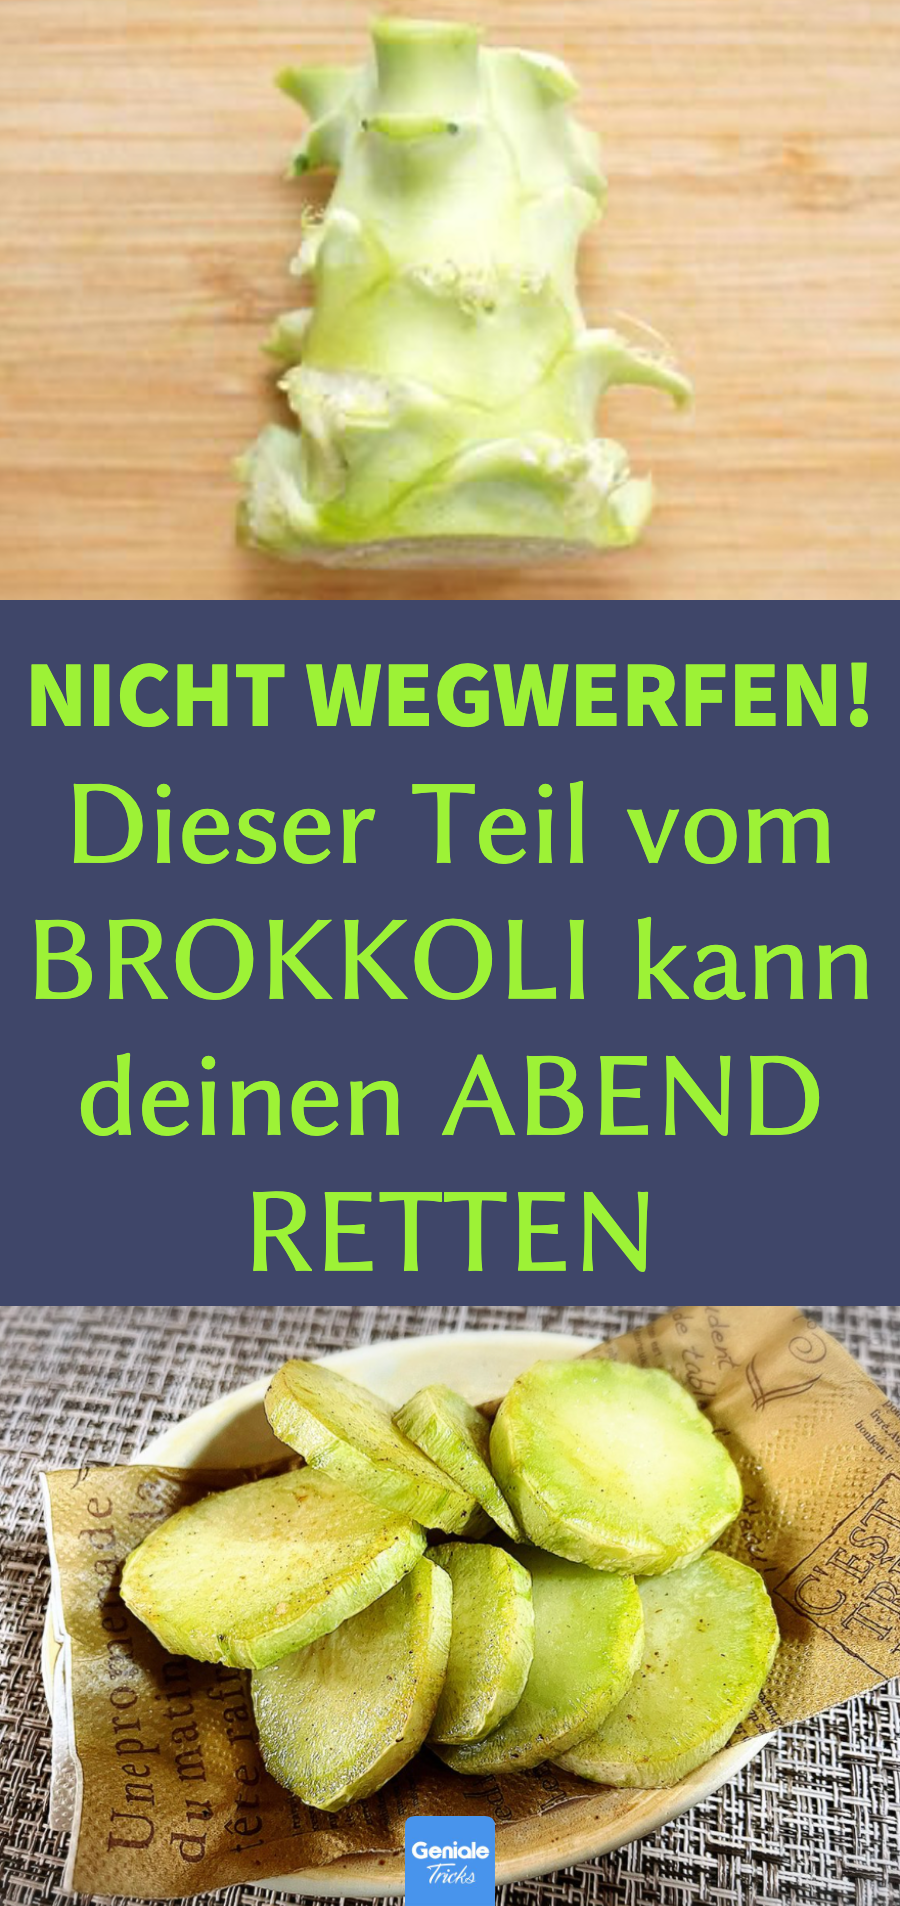 Rezept: Gemüsechips aus Brokkoli-Strunk